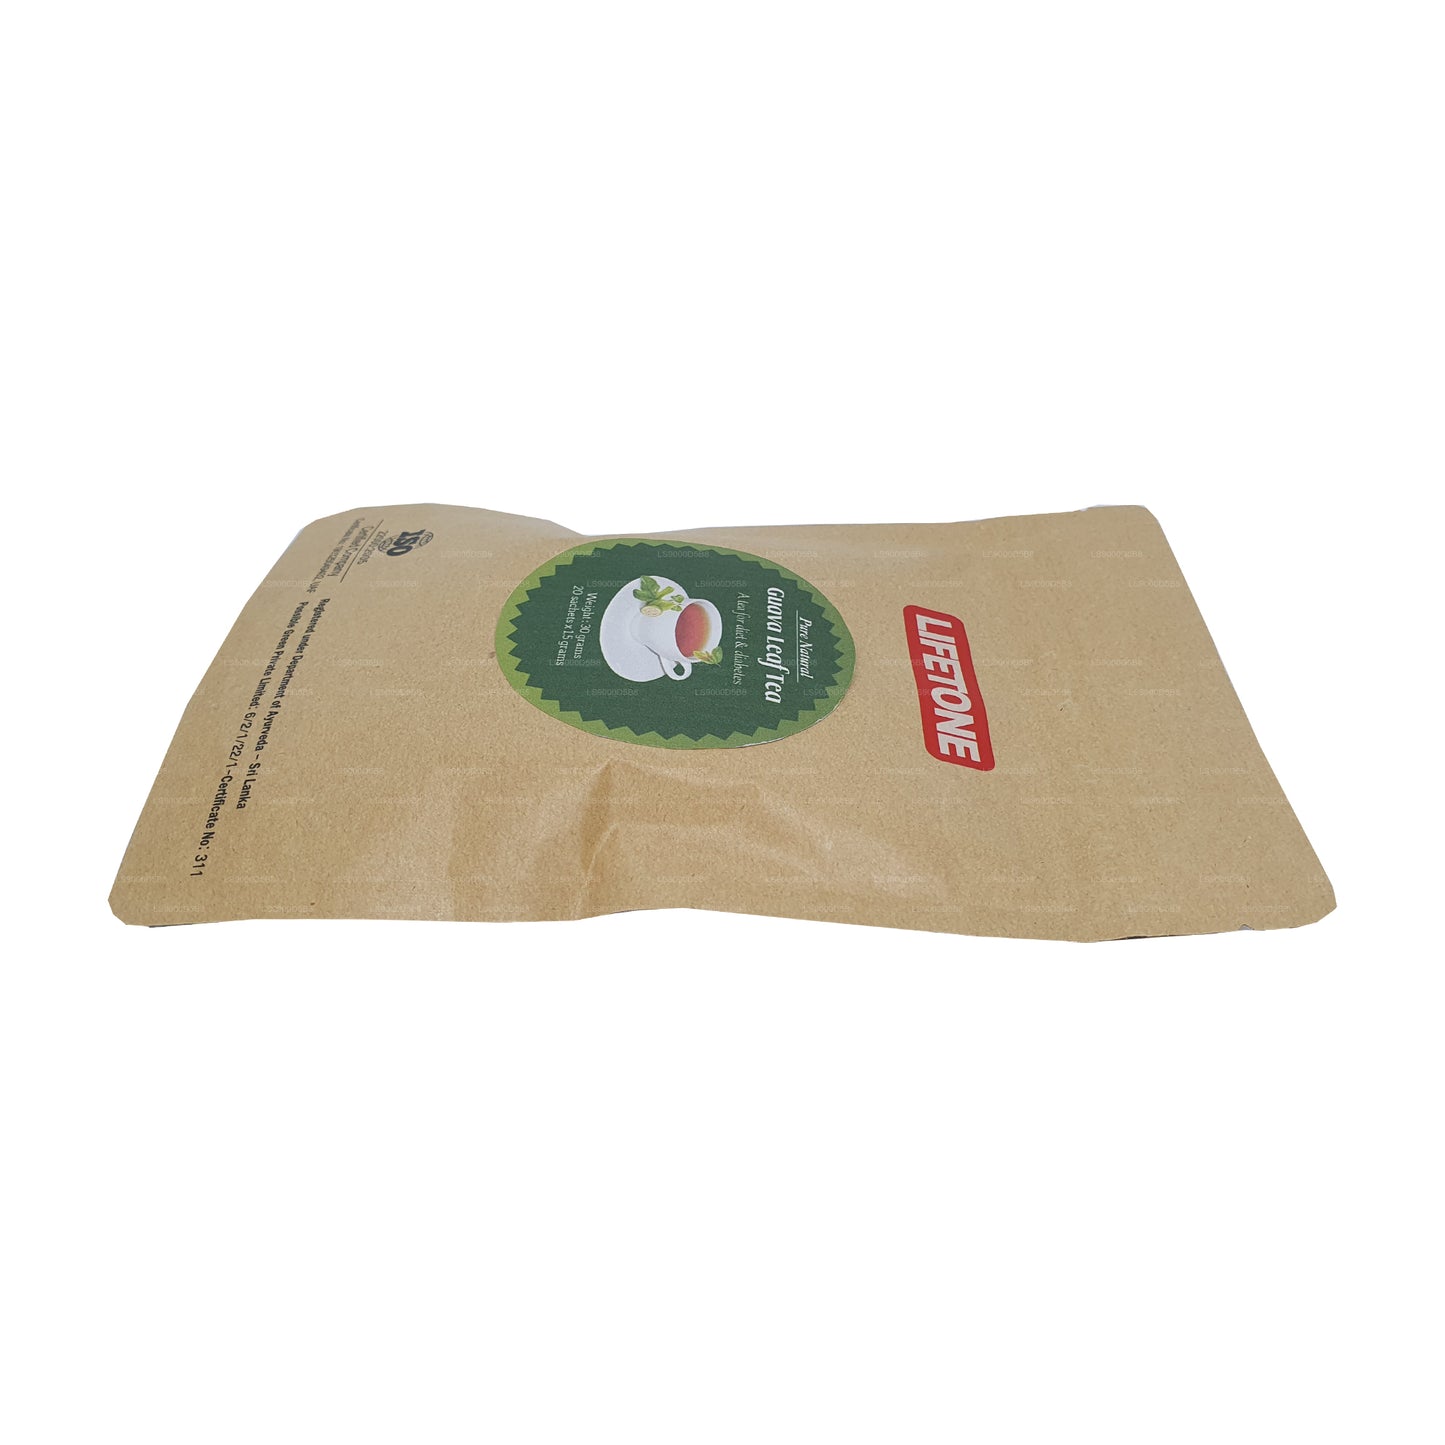 Lifetone Guava Leaf Tea (30g) 20 Tea Bags